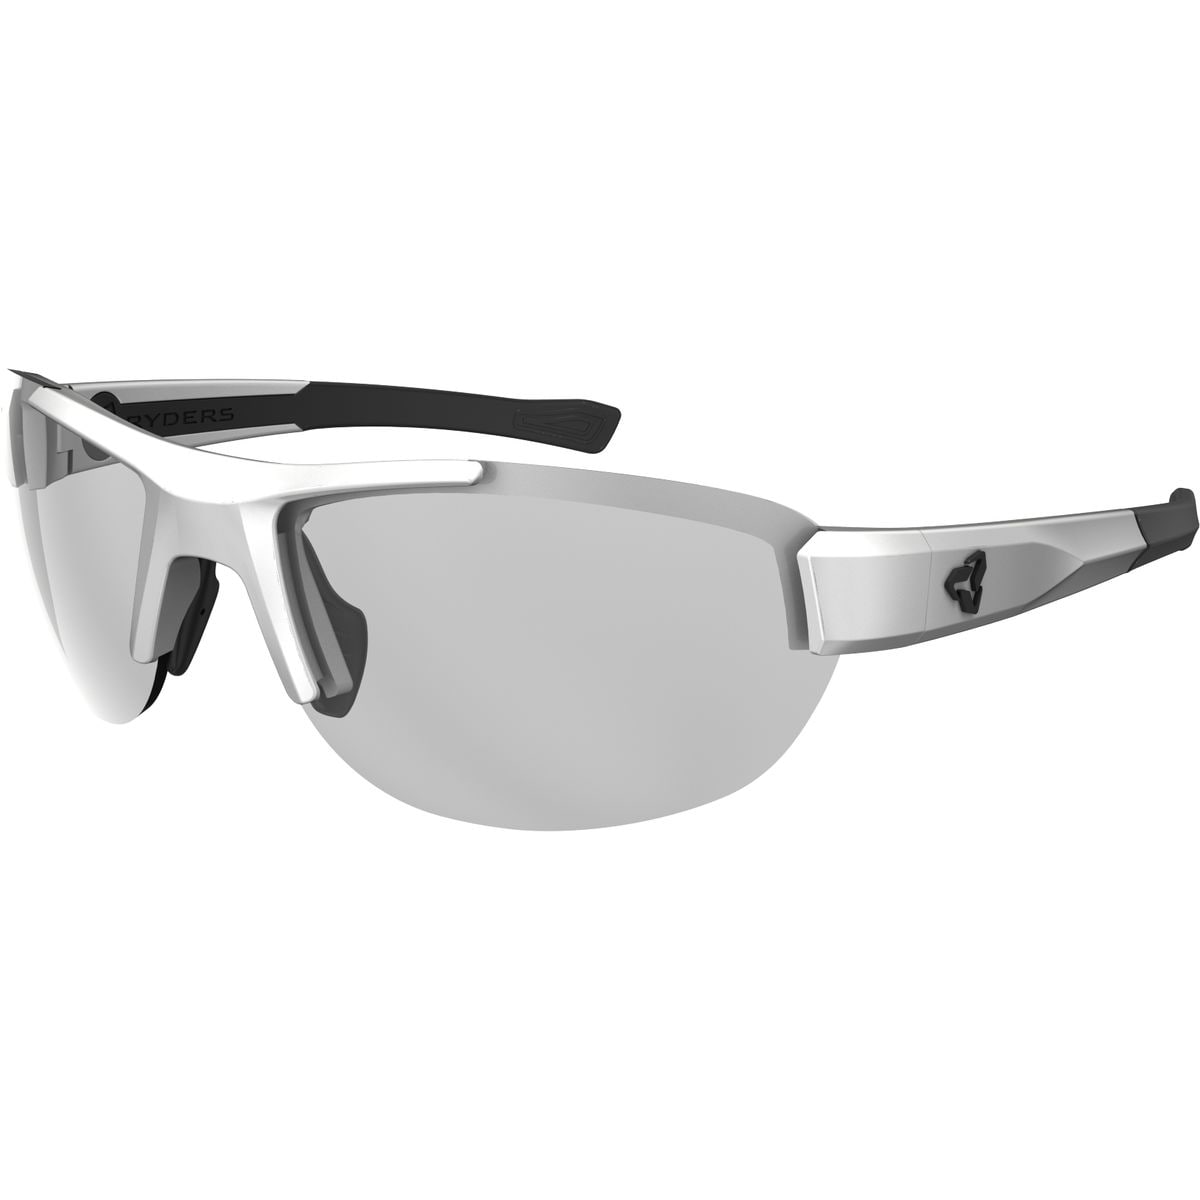 Ryders Eyewear Crankum Polarized Sunglasses - Men's